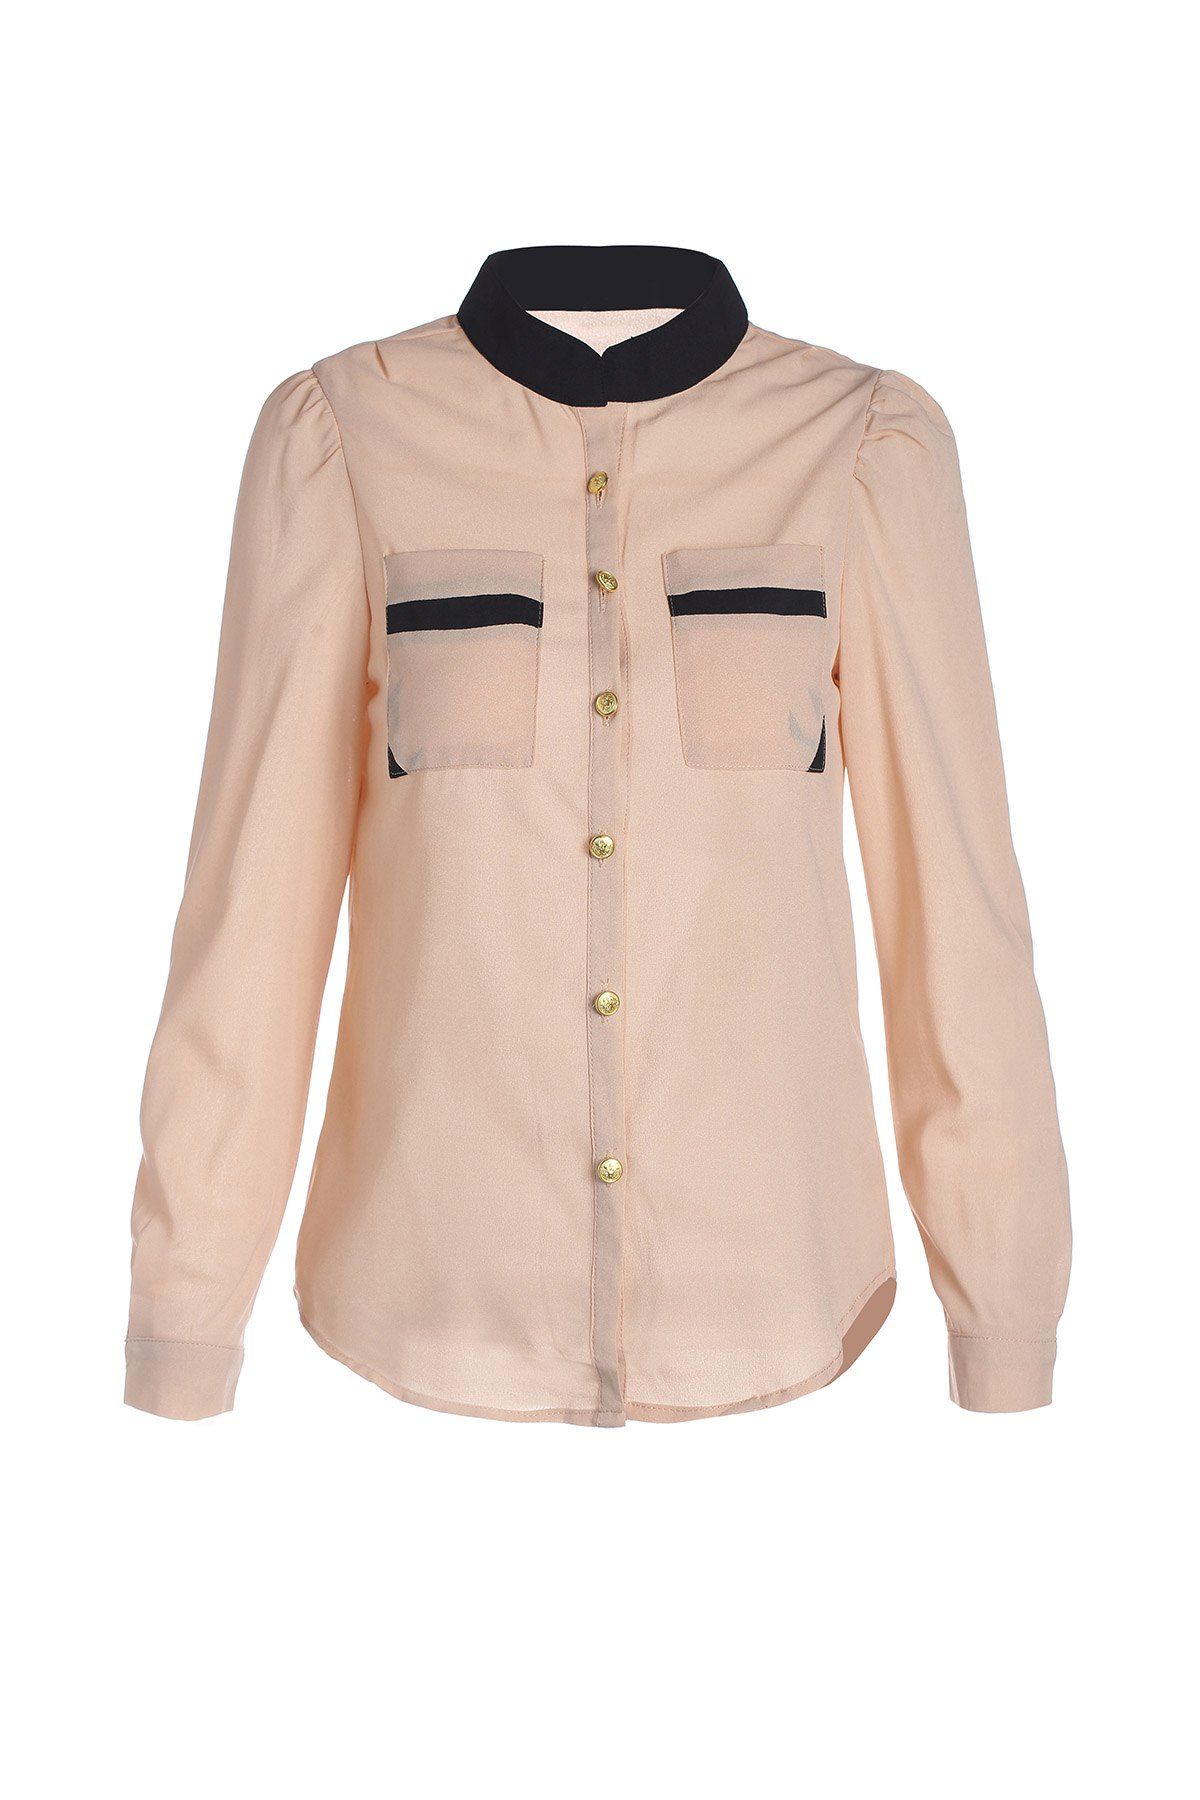 Sale Women's OL Style Slim Splicing Color Chiffon Stand-Collar Shirt Blouse  